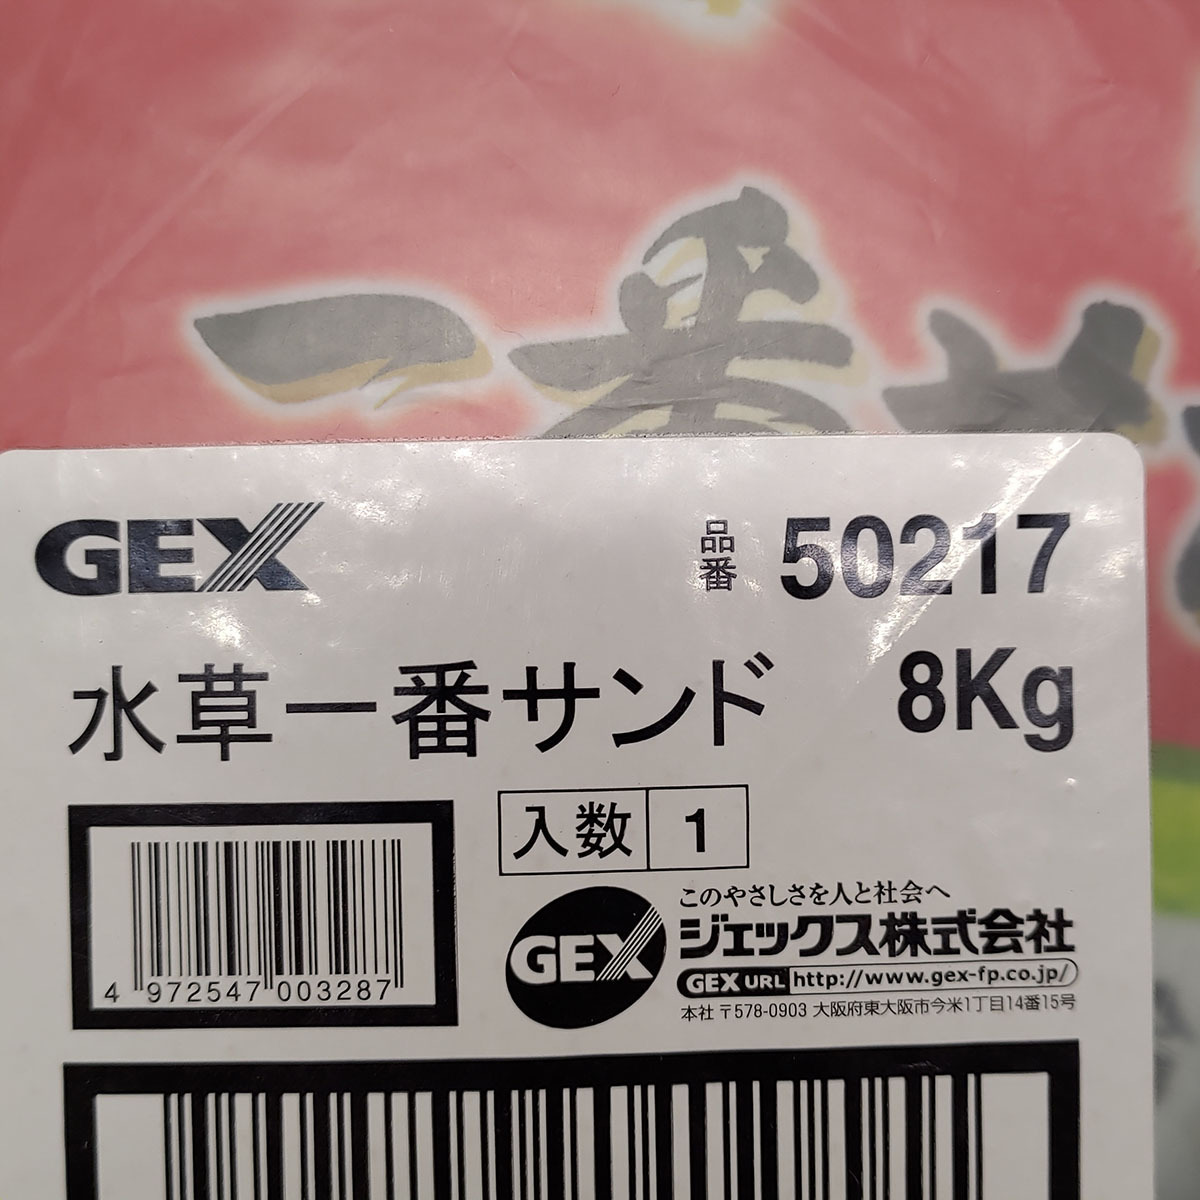 928円 超目玉 水草一番 サンド 8kg